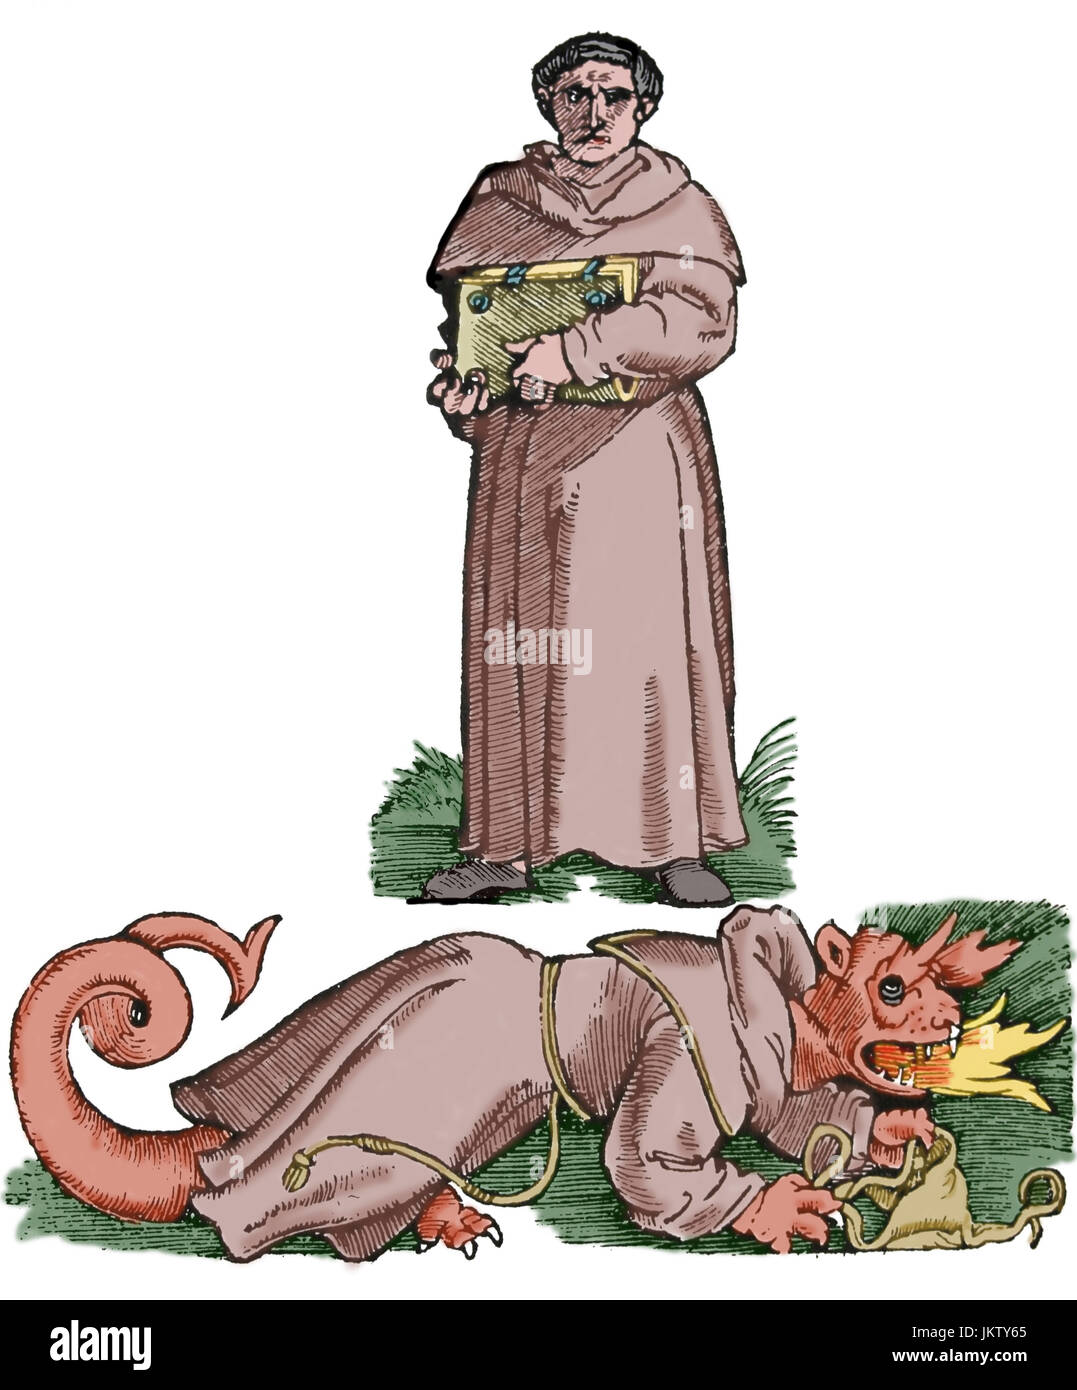 Martin Luther's triumph over the monk devil. From Matheus Gnidius' Dialogi, Germany, 1521. Stock Photo